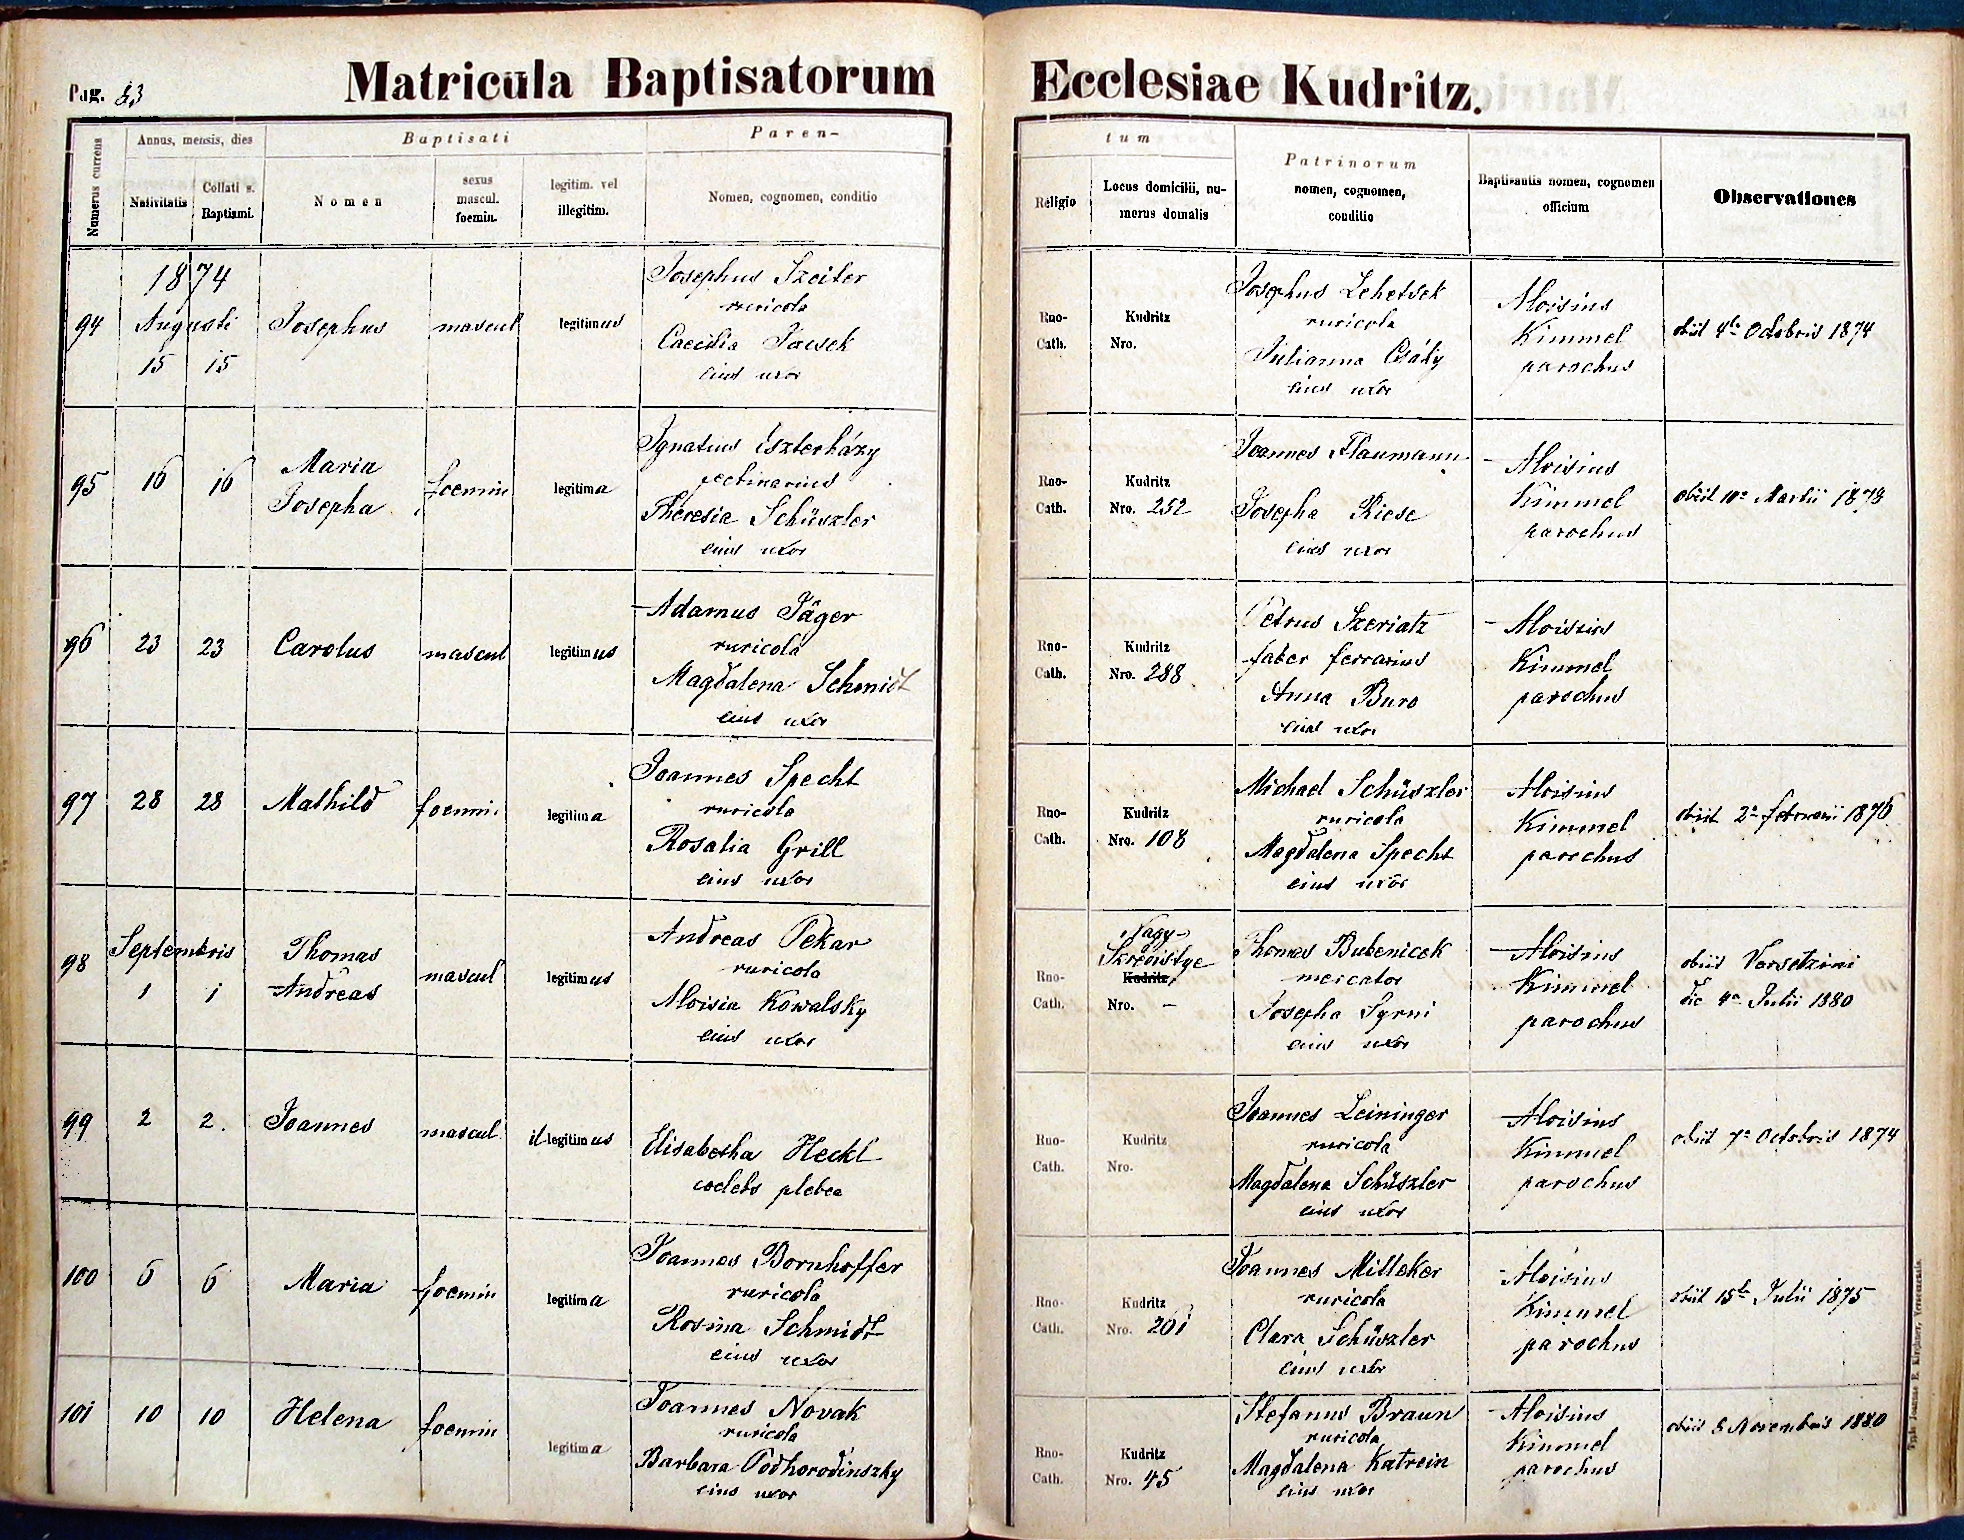 images/church_records/BIRTHS/1884-1899B/1889/083